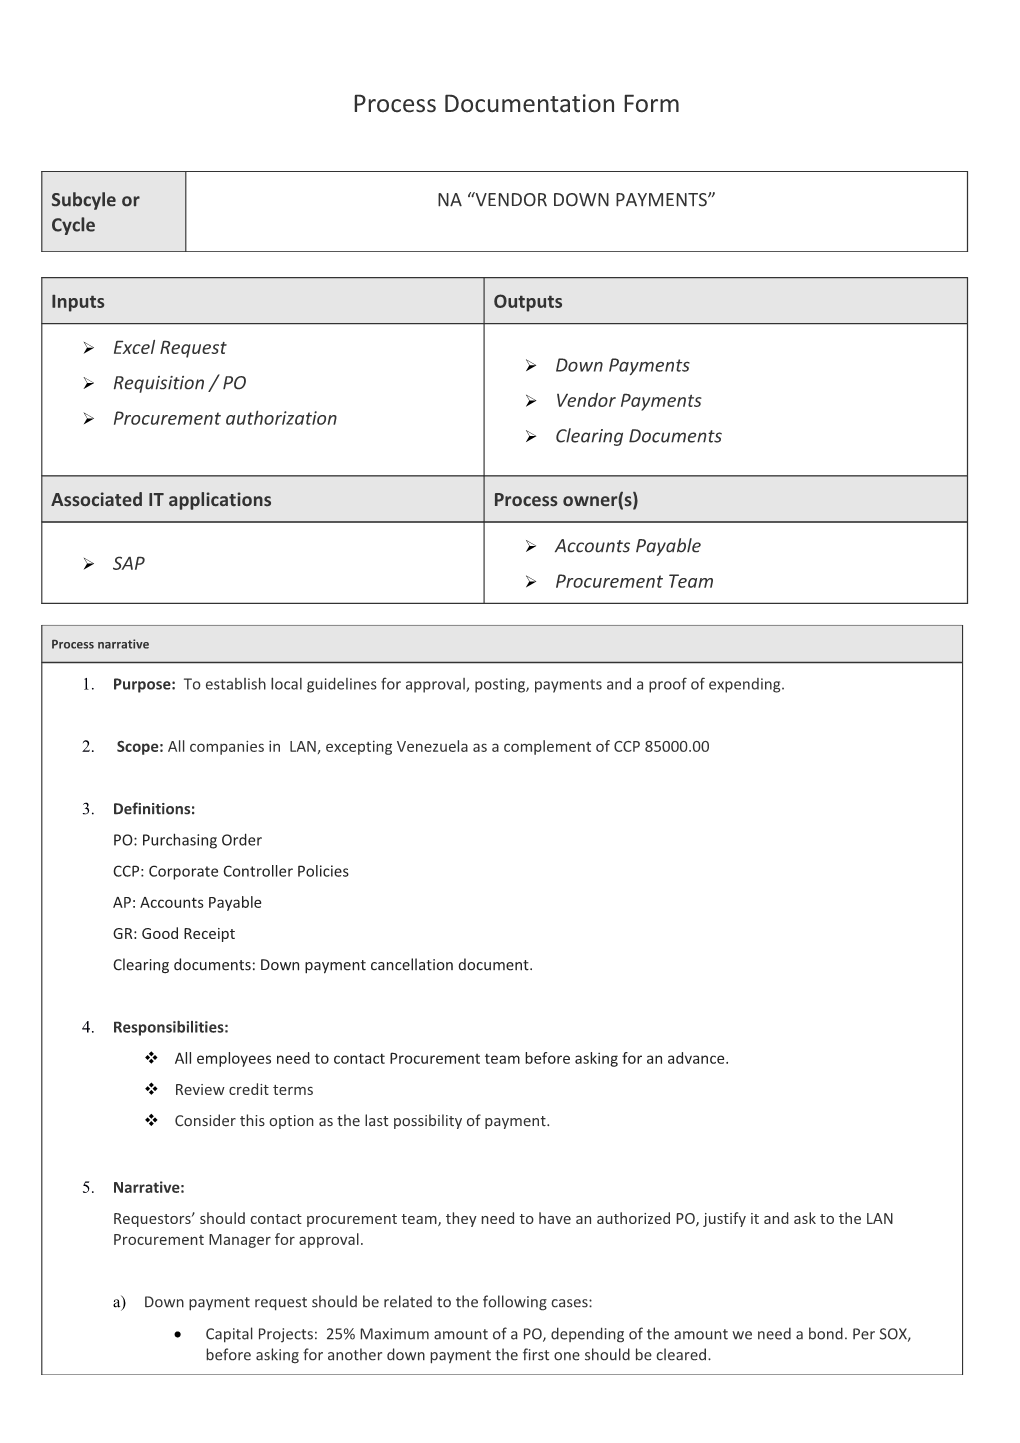 Process Documentation Form